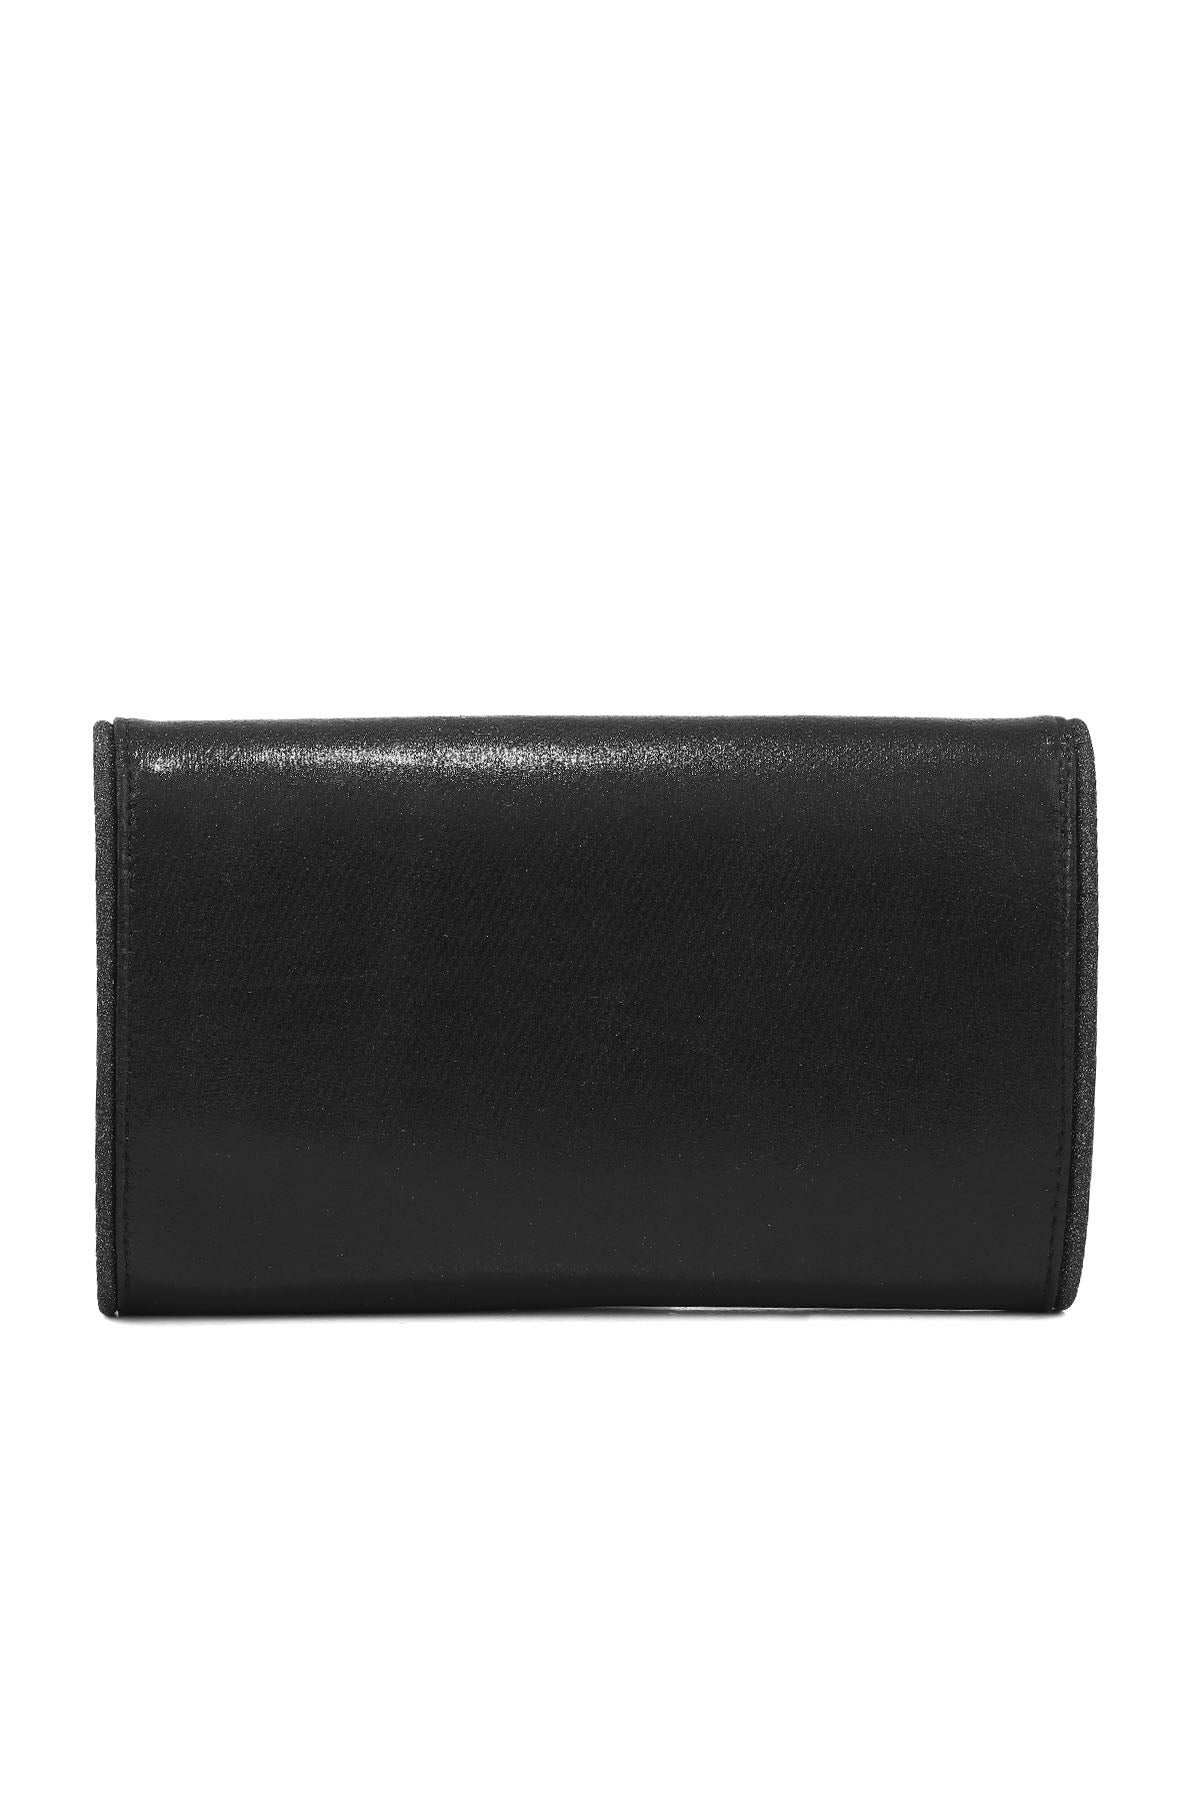 Envelope Clutch B21546-Black